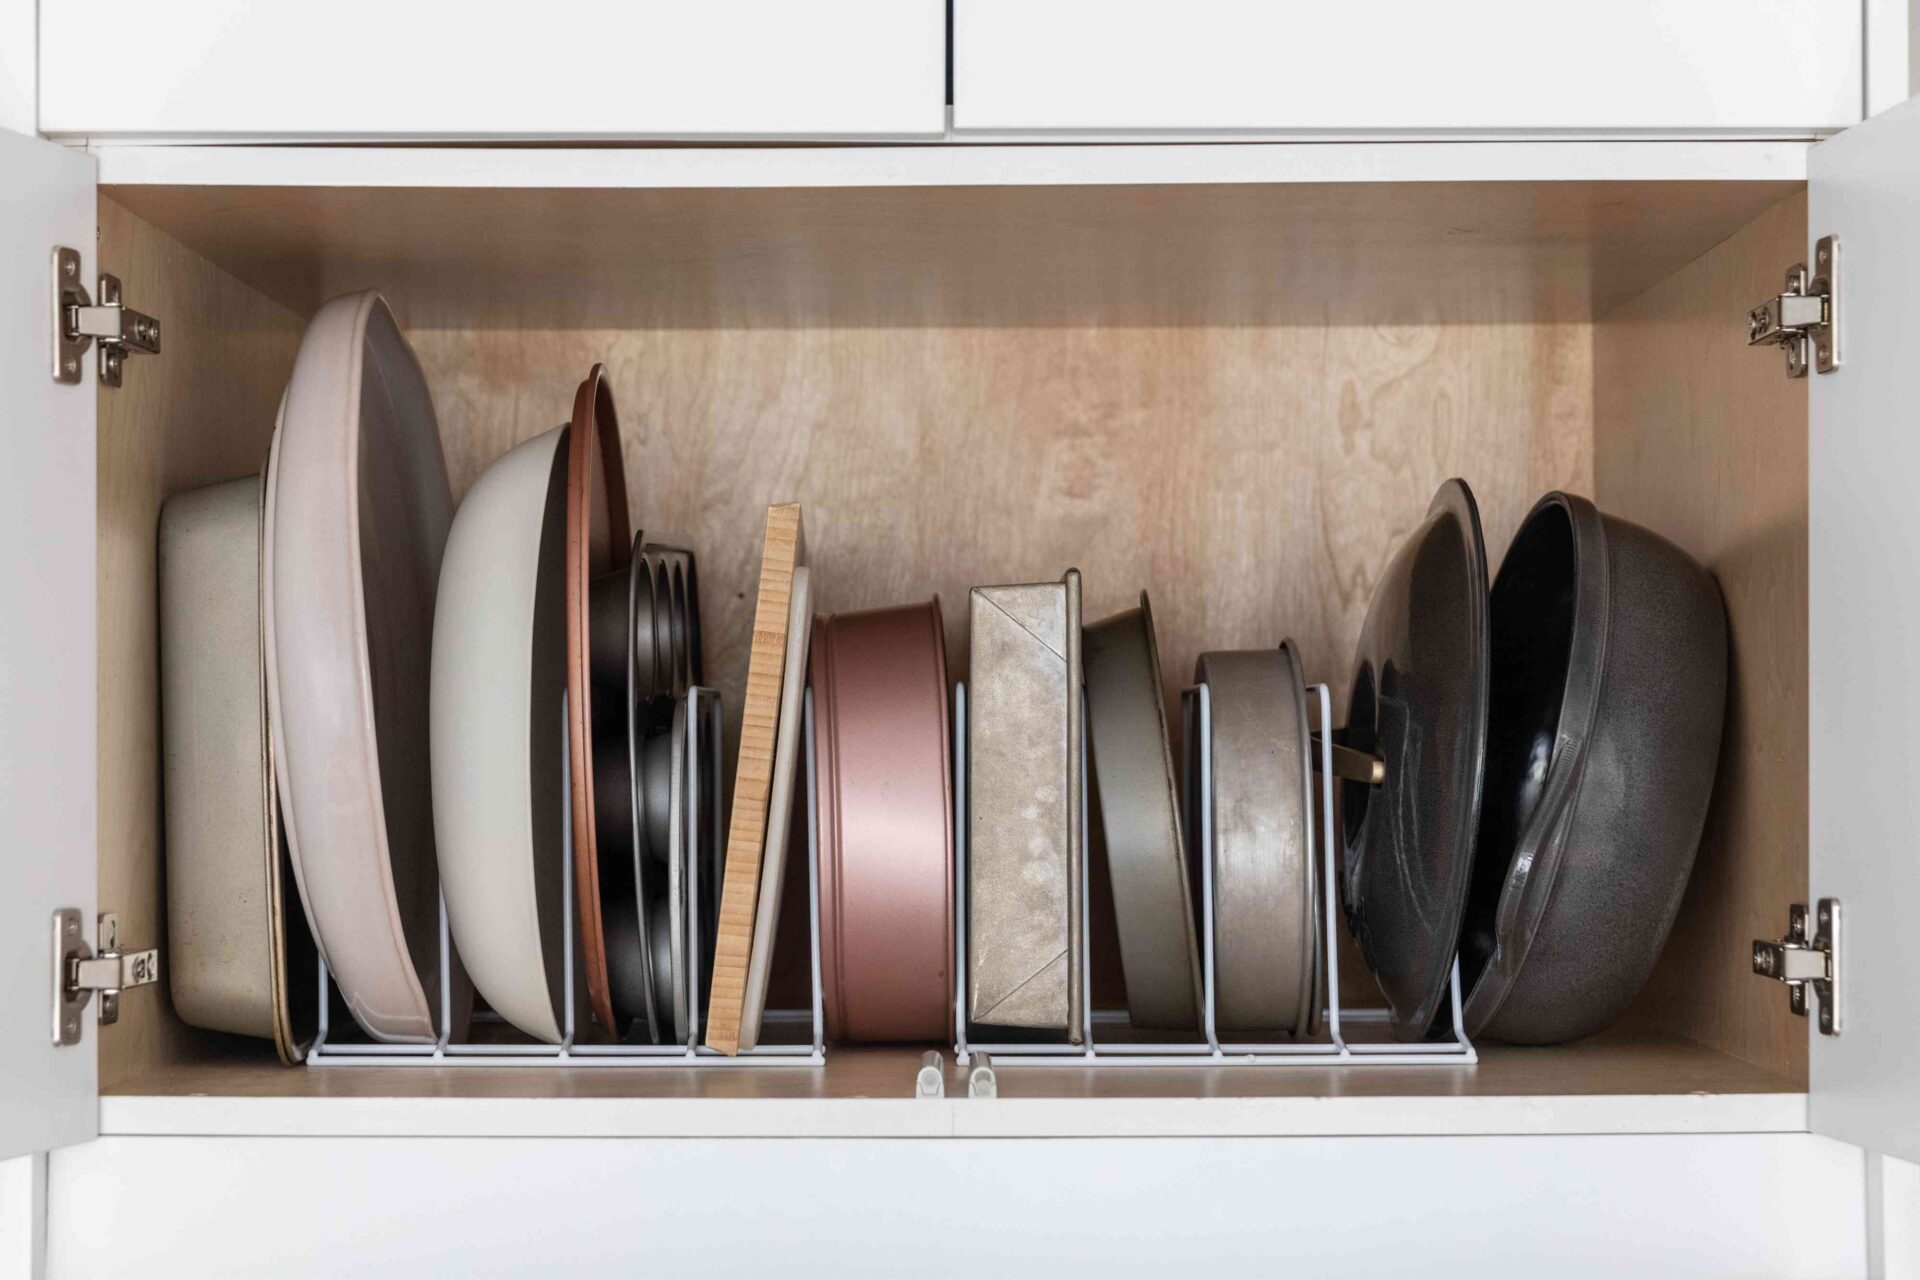 Diy Kitchen Garbage Can Storage: Clever Hacks to Organize Your Waste